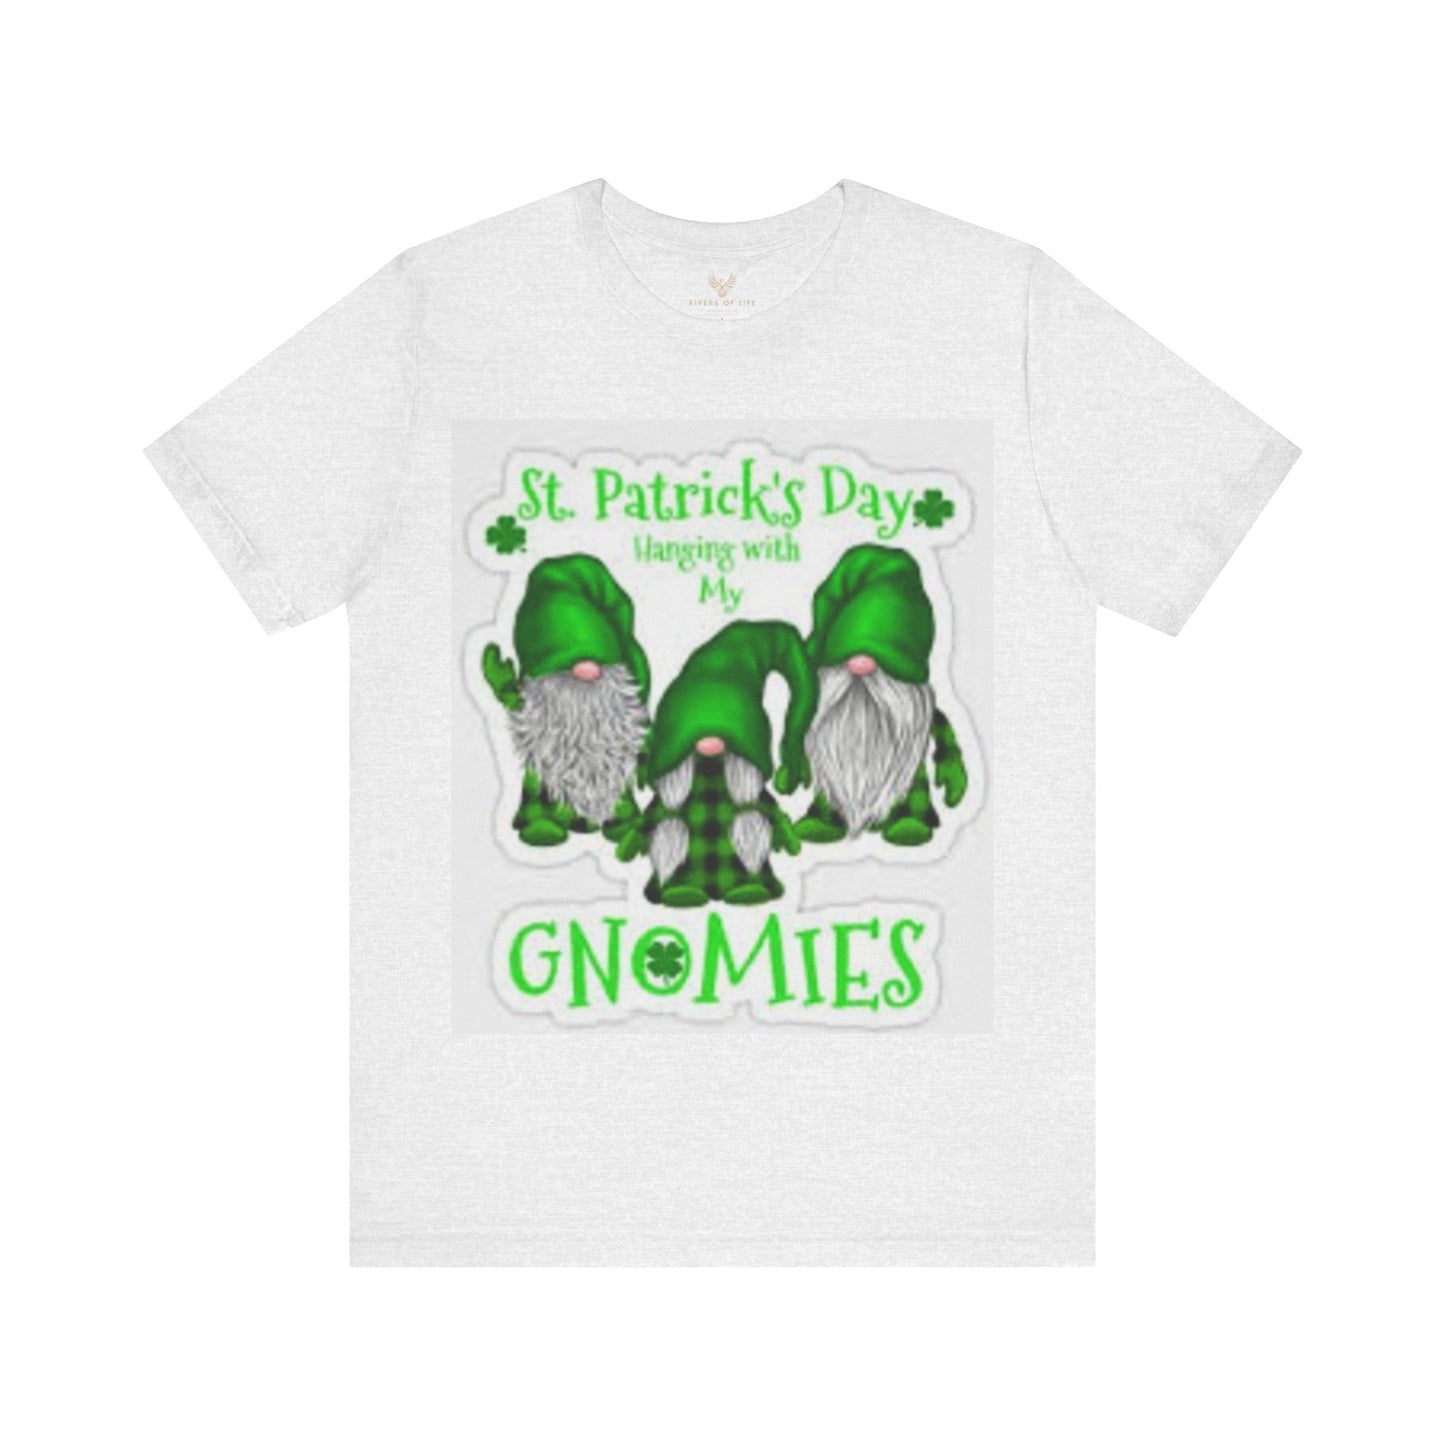 St Patricks Day "Hanging With My Gnomies", Funny St. Patricks Day Shirt, Leperechaun, Gnome